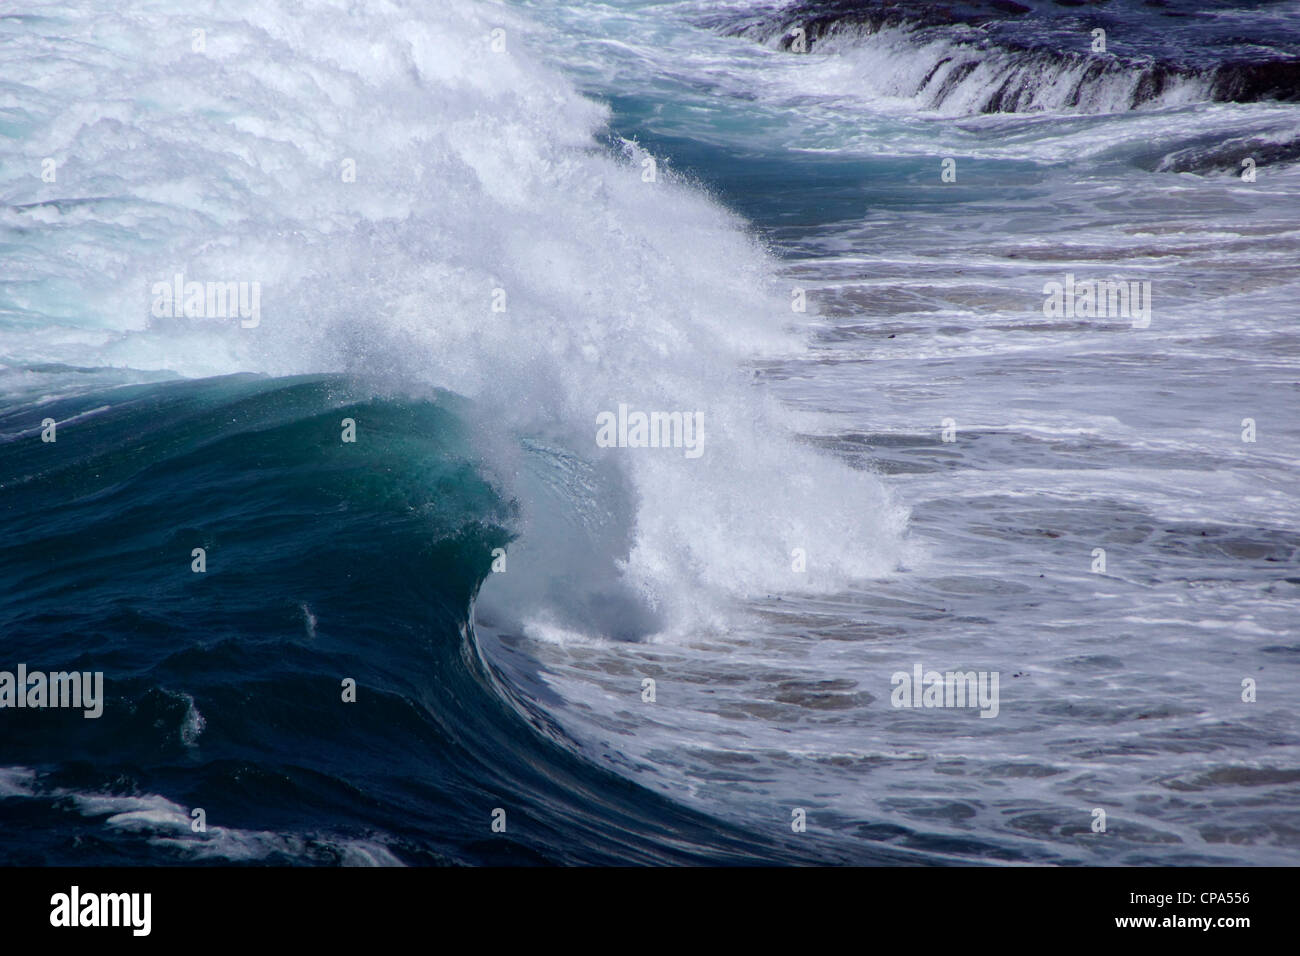 Breaking wave, big surf Stock Photo